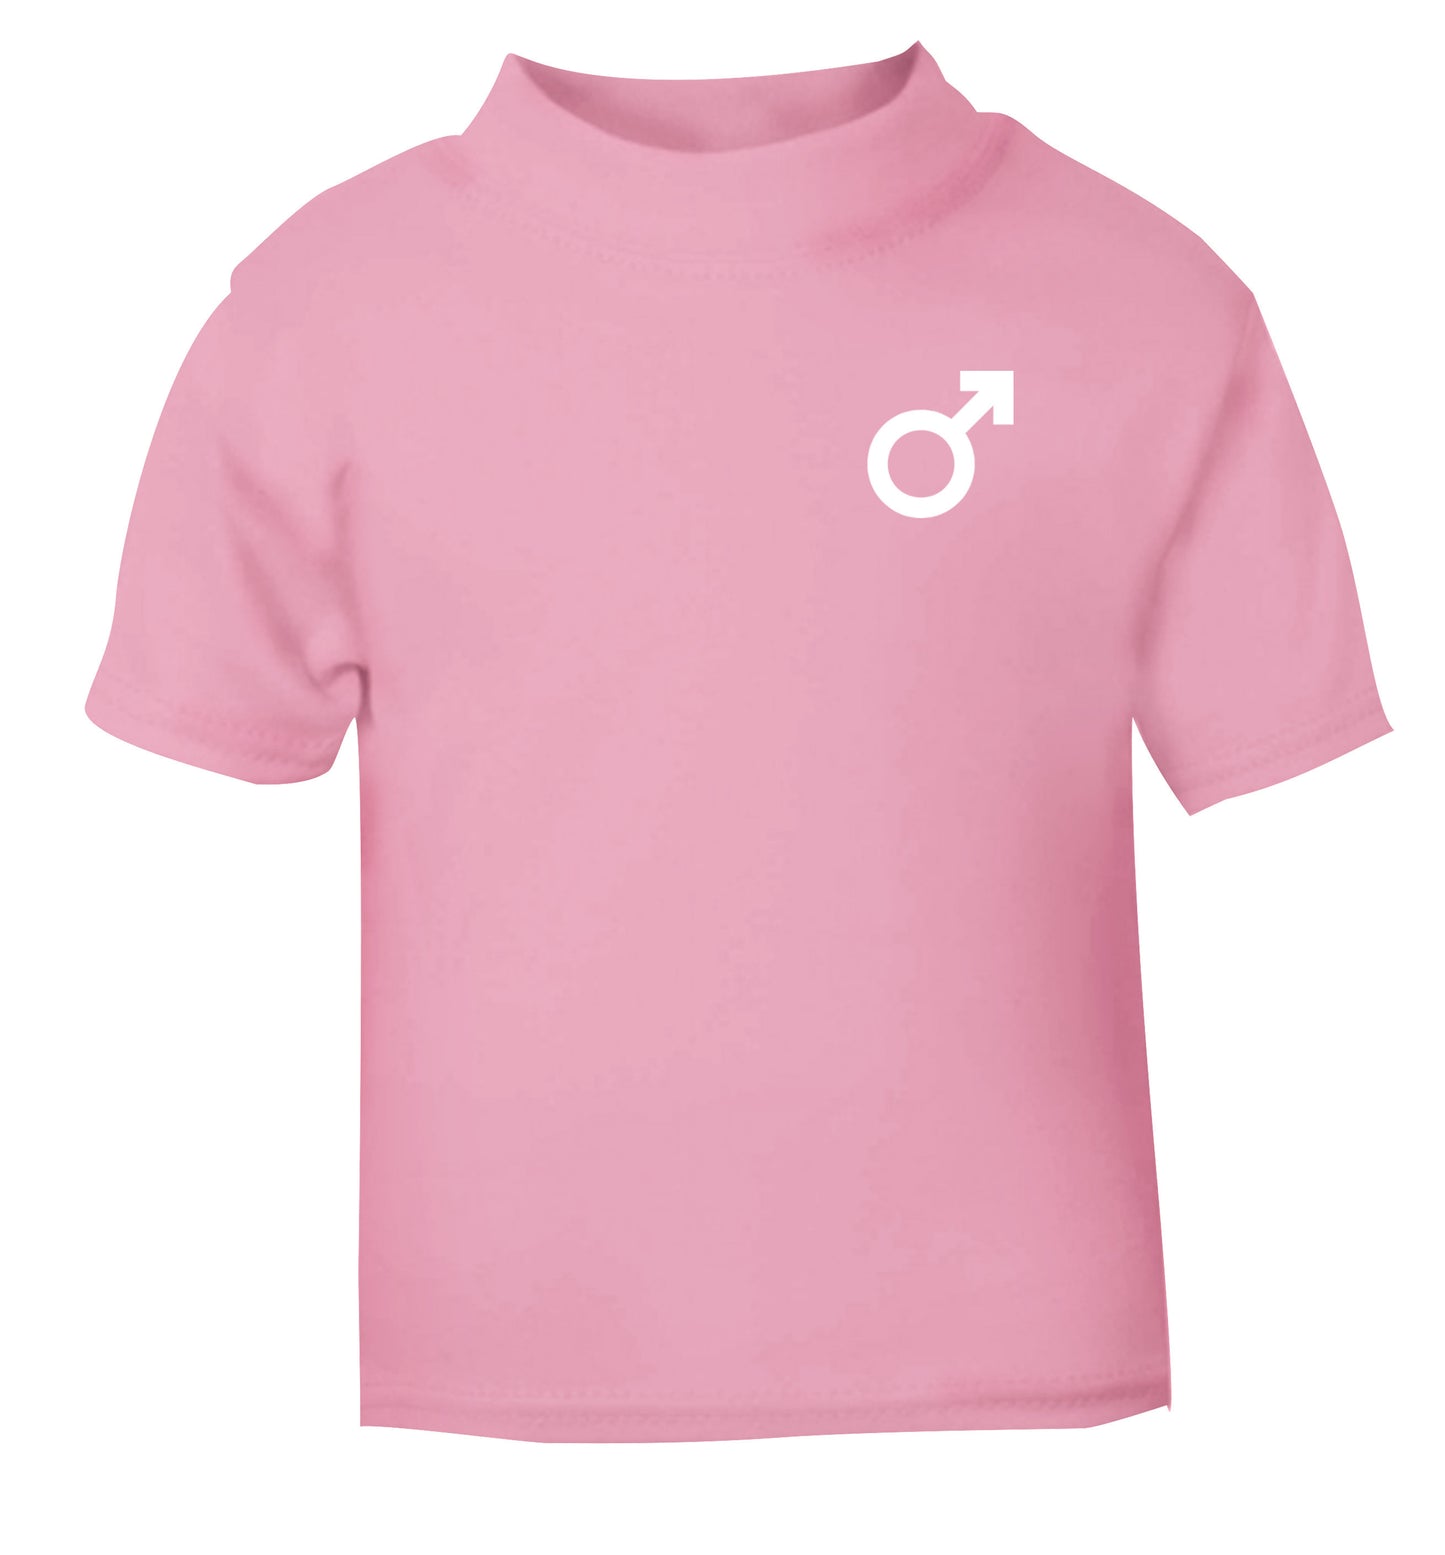 Male symbol pocket light pink Baby Toddler Tshirt 2 Years